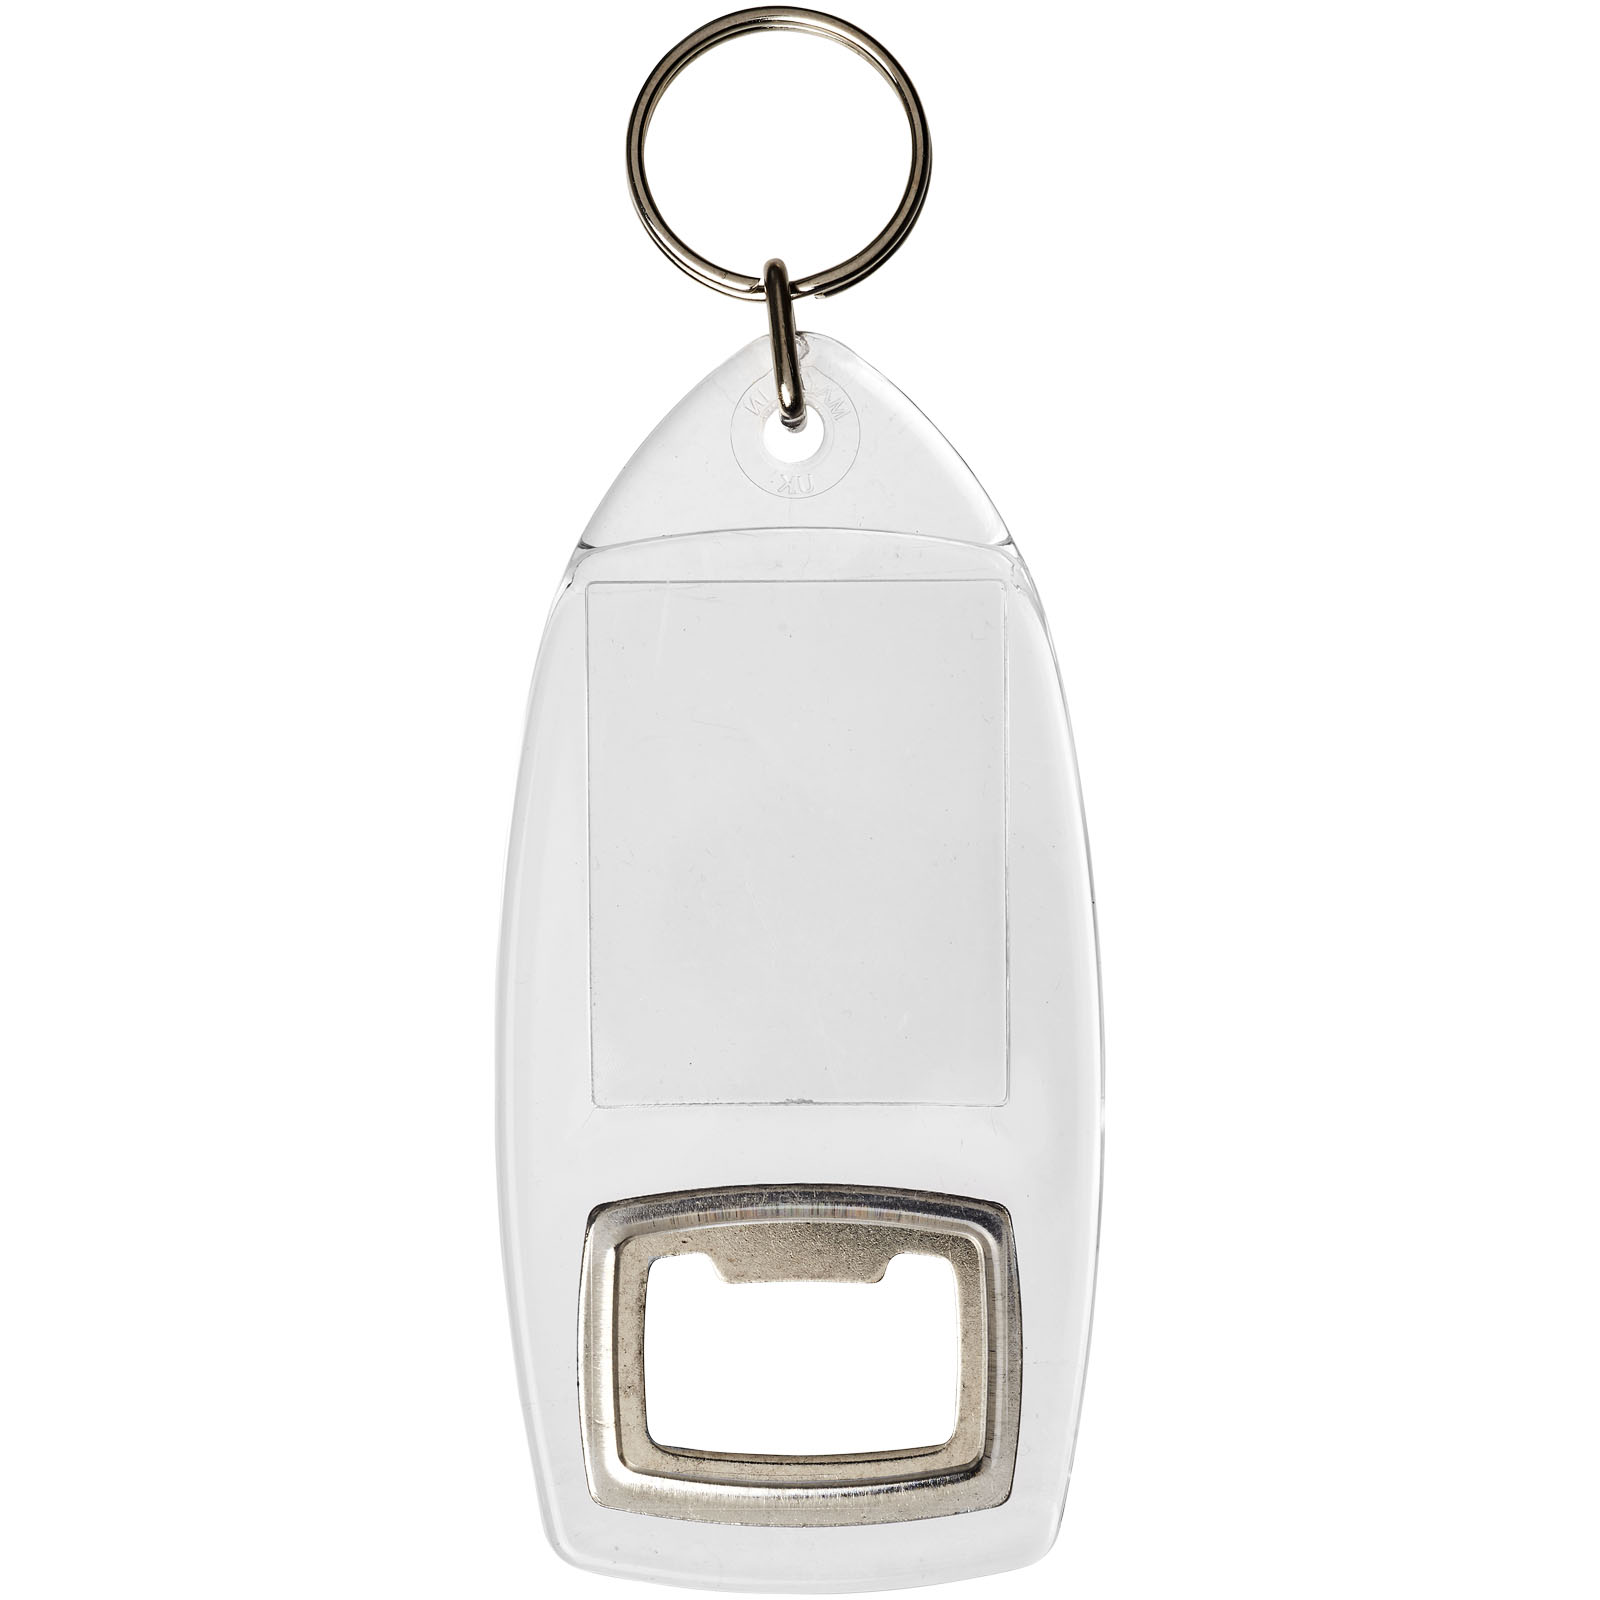 Advertising Bottle Openers & Accessories - Jibe R1 bottle opener keychain - 1